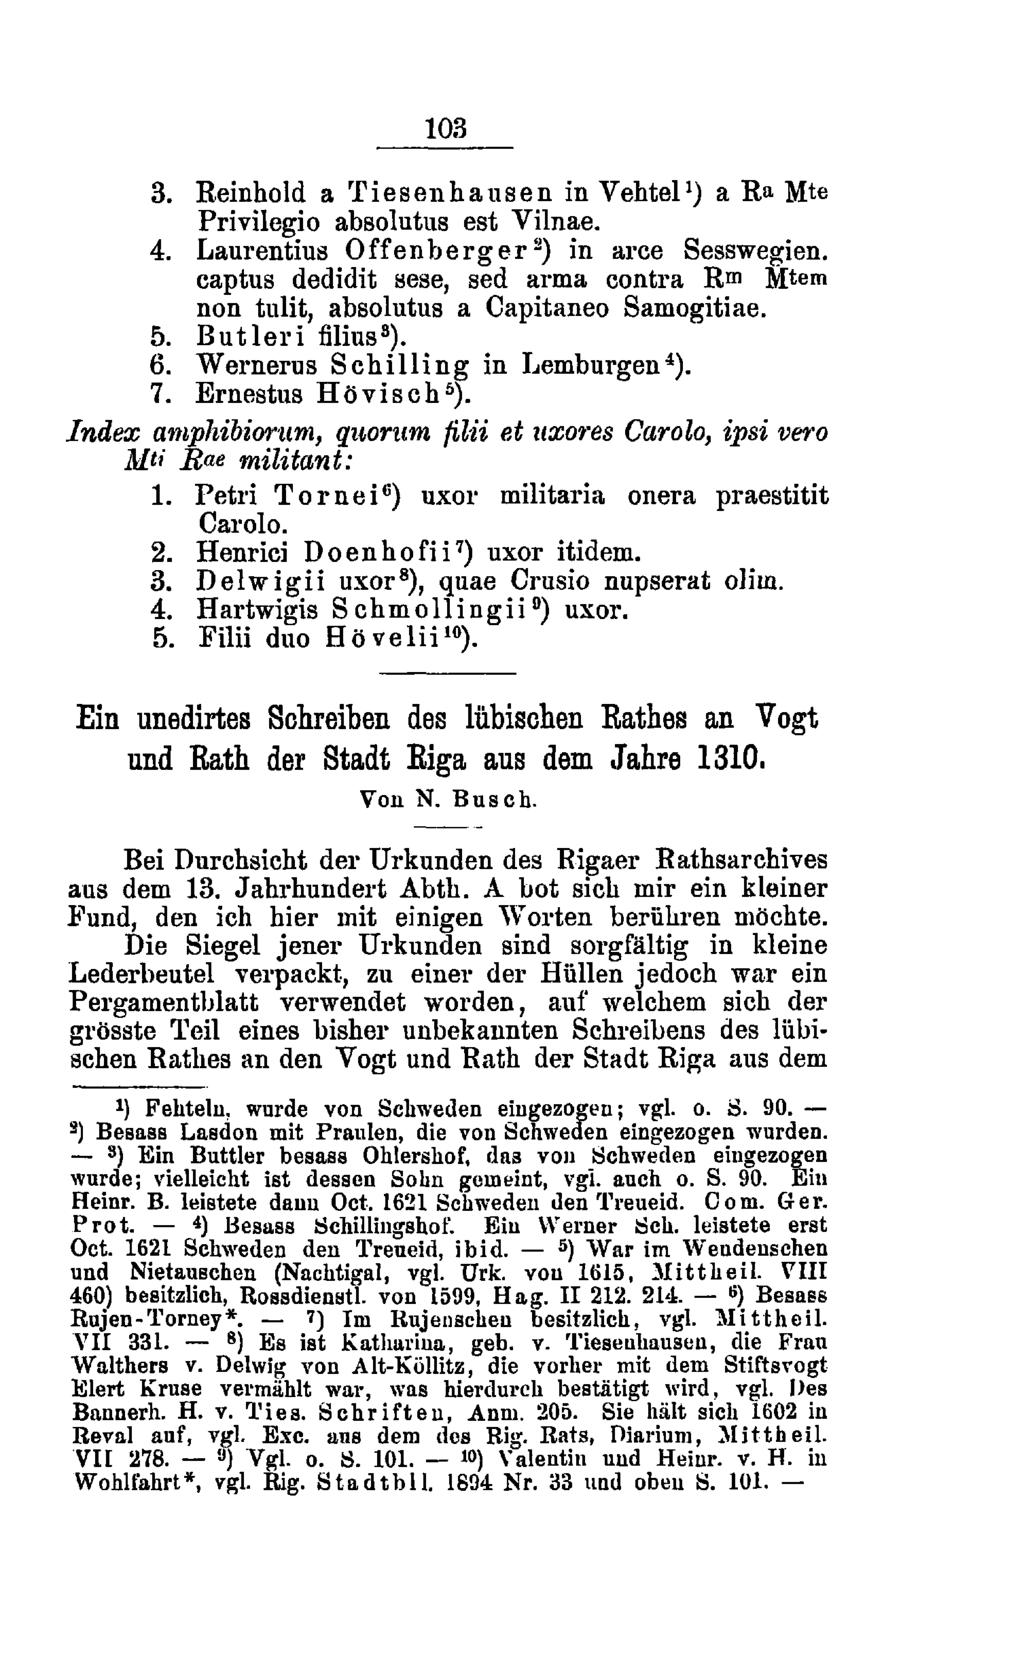 103 3. Reinhold a Tiesenhausen in Vehtel 1 ) a Ra Mte Privilegio absolutus est Yilnae. 4. Laurentius Offenberg er 2 ) in arce Sesswegien.